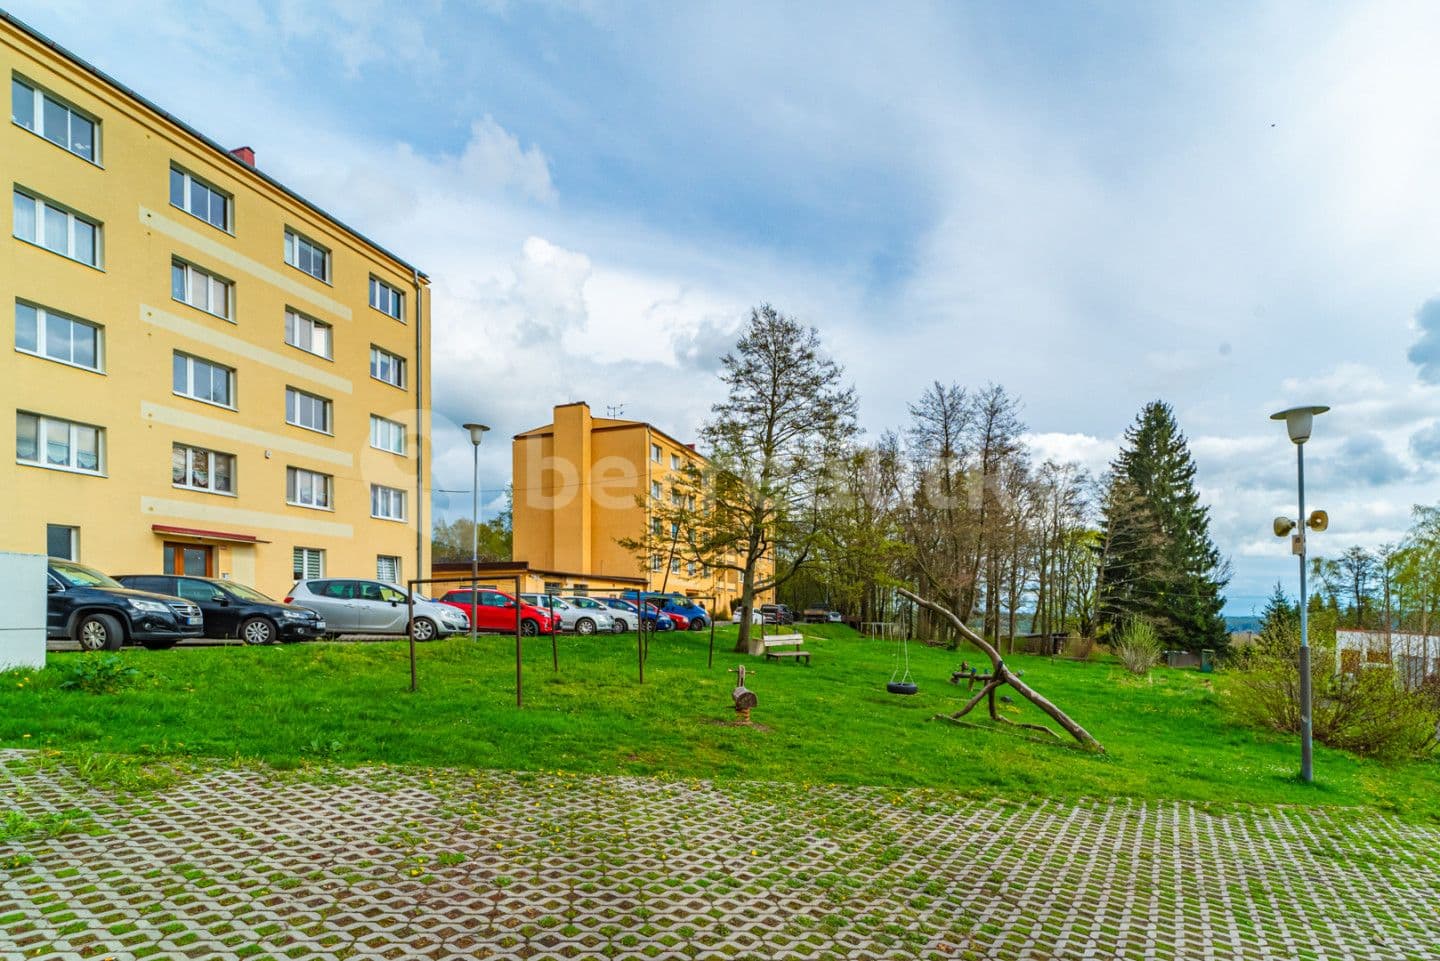 Predaj bytu 3-izbový 68 m², 5. května, Lázně Kynžvart, Karlovarský kraj